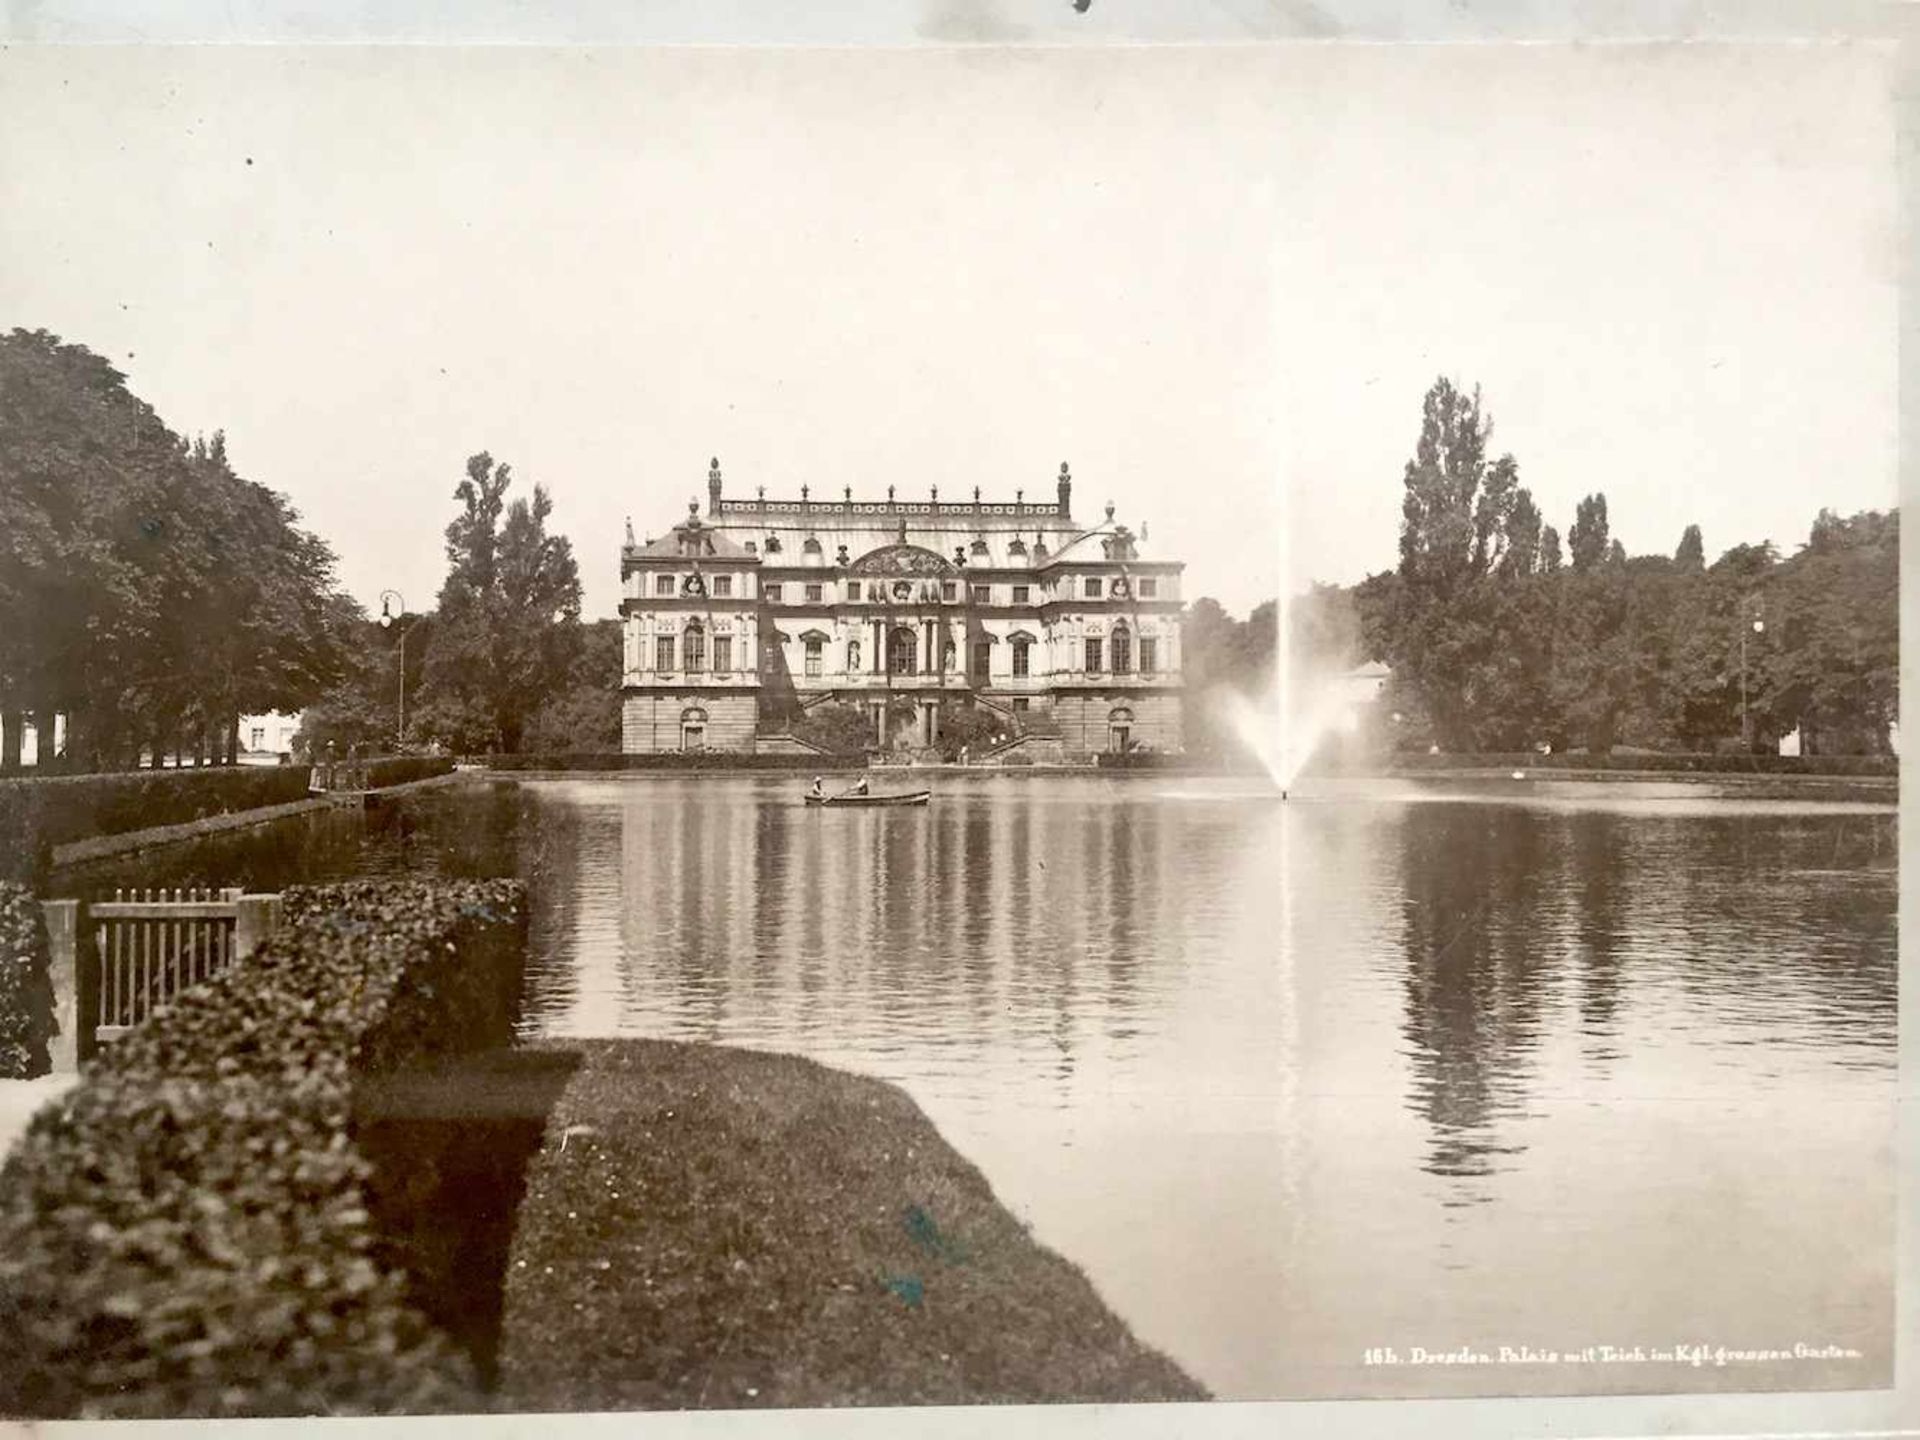 Photografie: "16b Dresden Palais mit Teich im Kgl. grossen Garten". um 1900.Seltene Photografie,